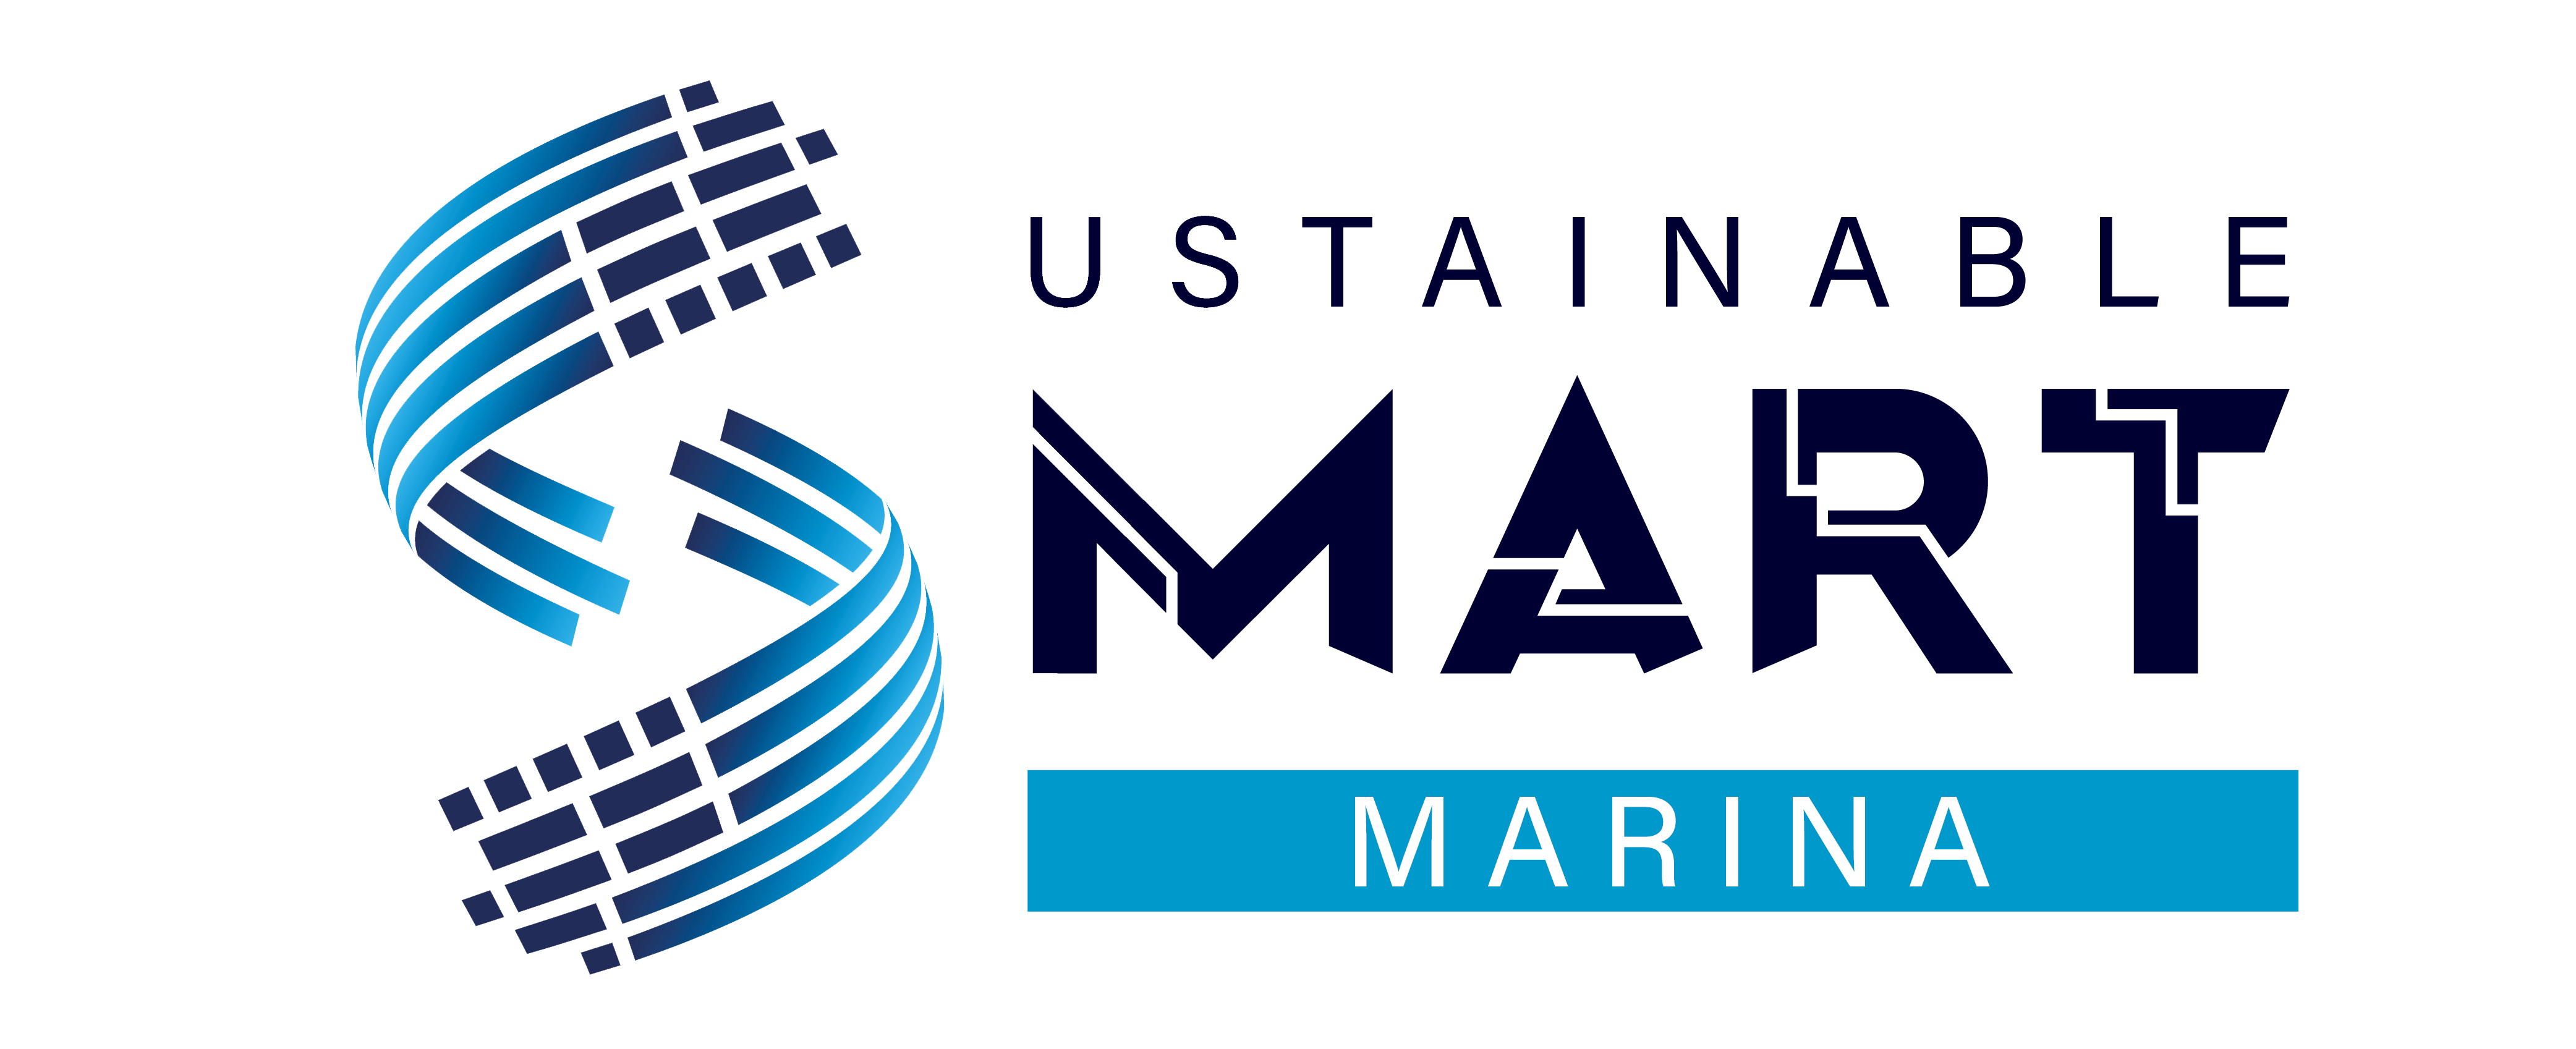 Sustainable Smart Yachting & Marina